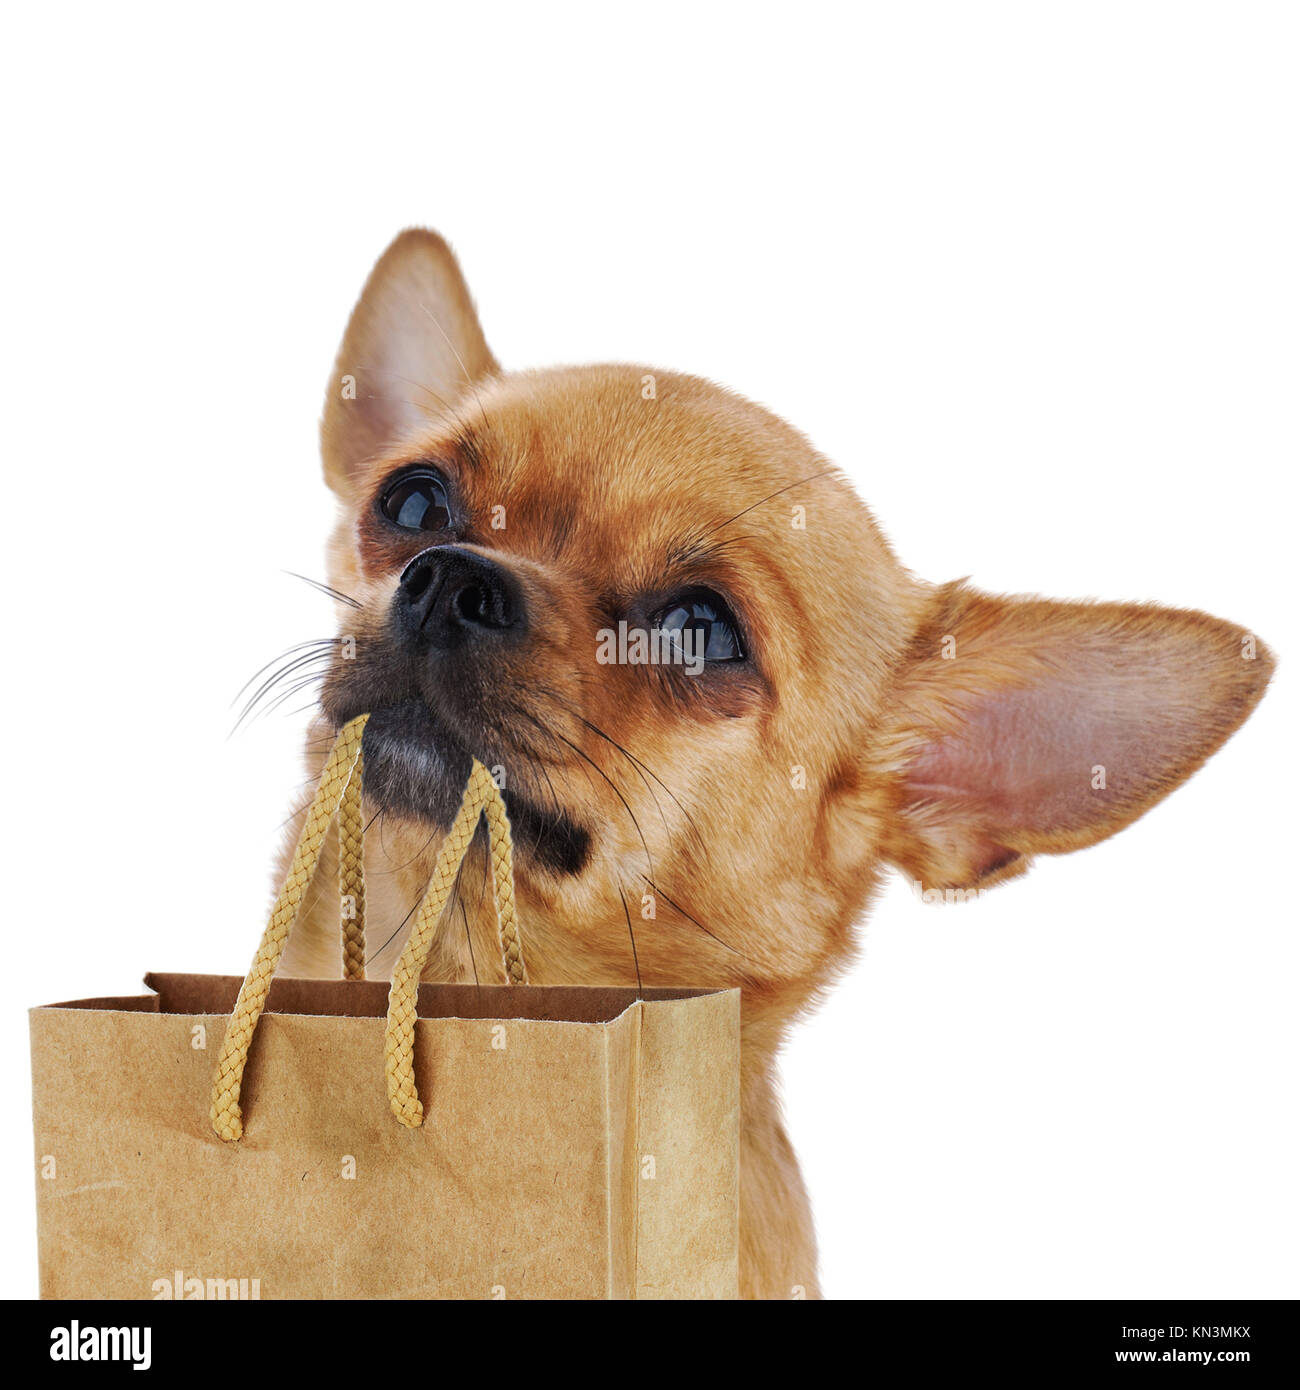 Chihuahua handbag hi-res stock photography and images - Alamy